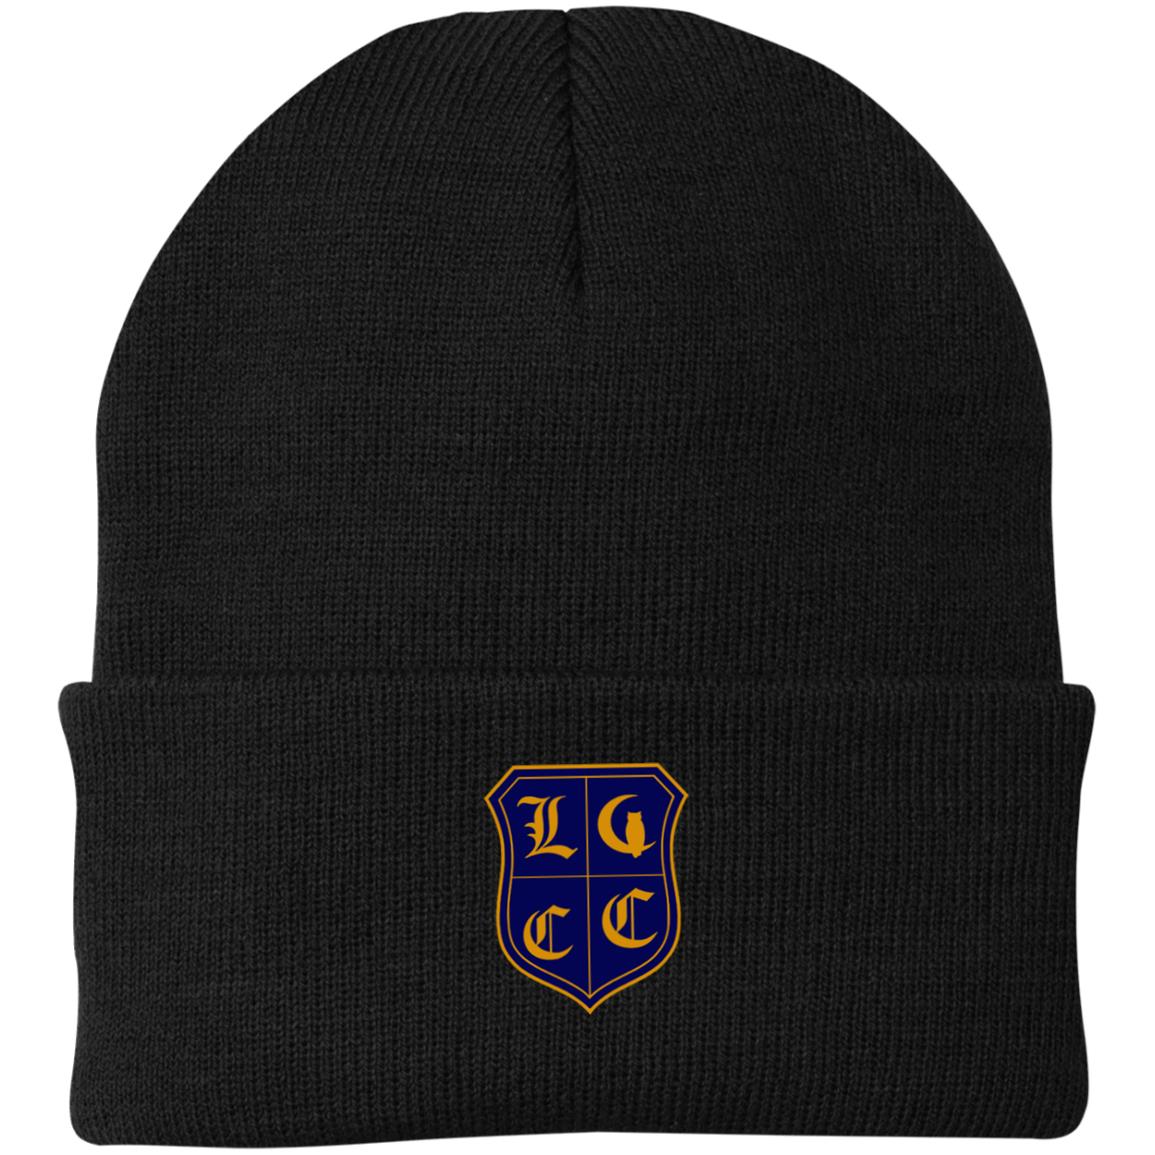 LCC Royal Knit Cap